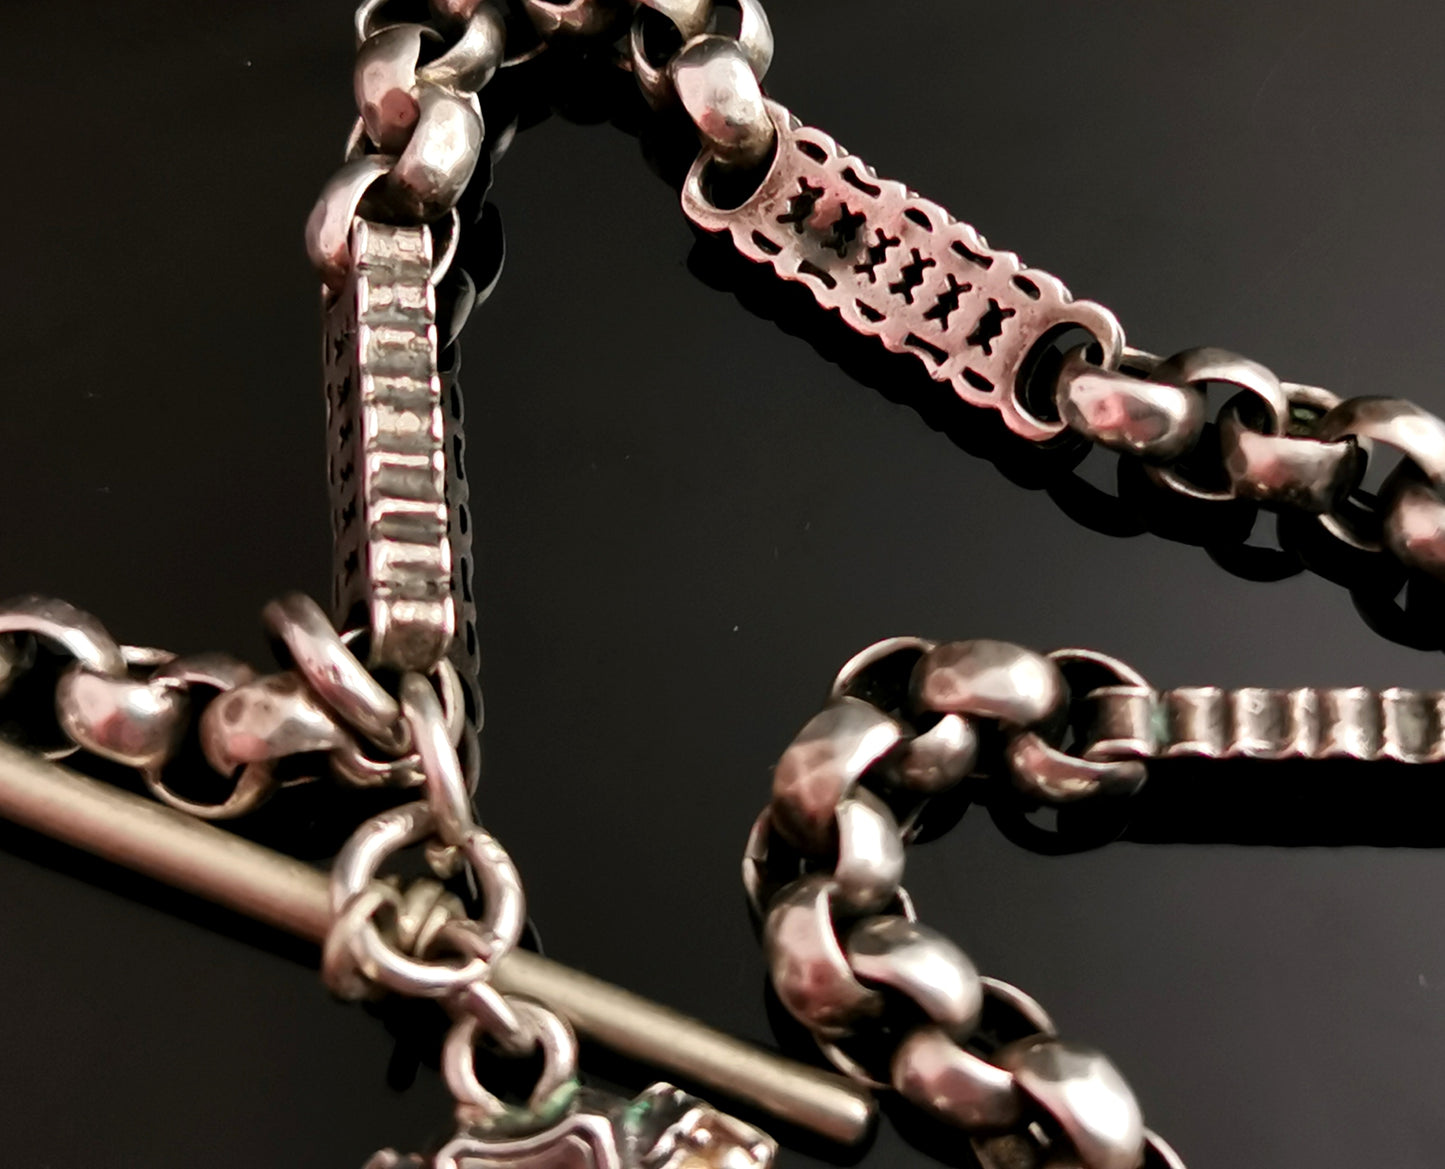 Antique silver Albert chain, Fancy link, Lion swivel fob, watch chain